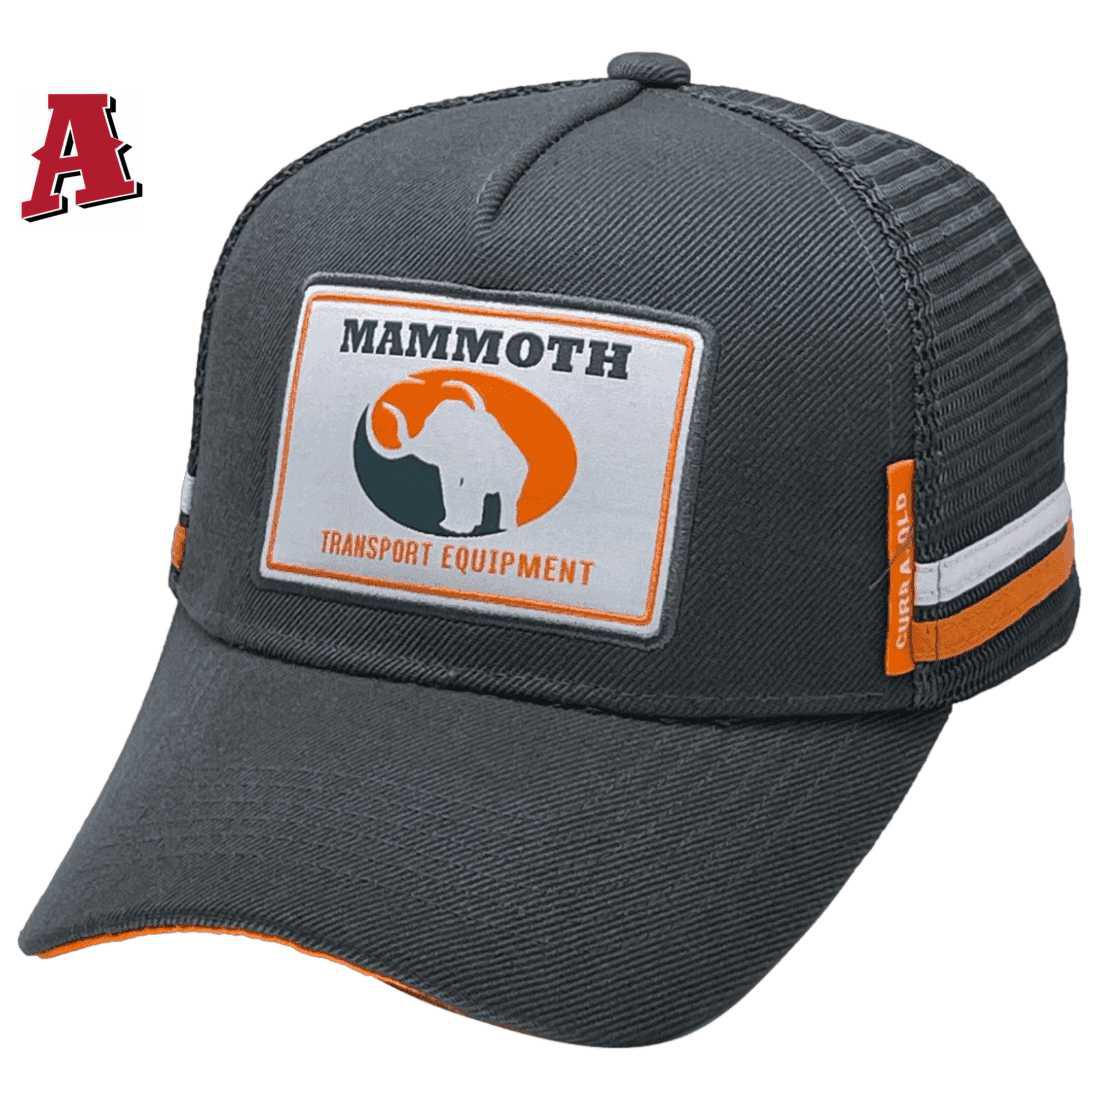 Mammoth Transport Equipment Wynnum QLD LP Basic Aussie Trucker Hats with 2 Side Bands and Australian Head Fit Crown